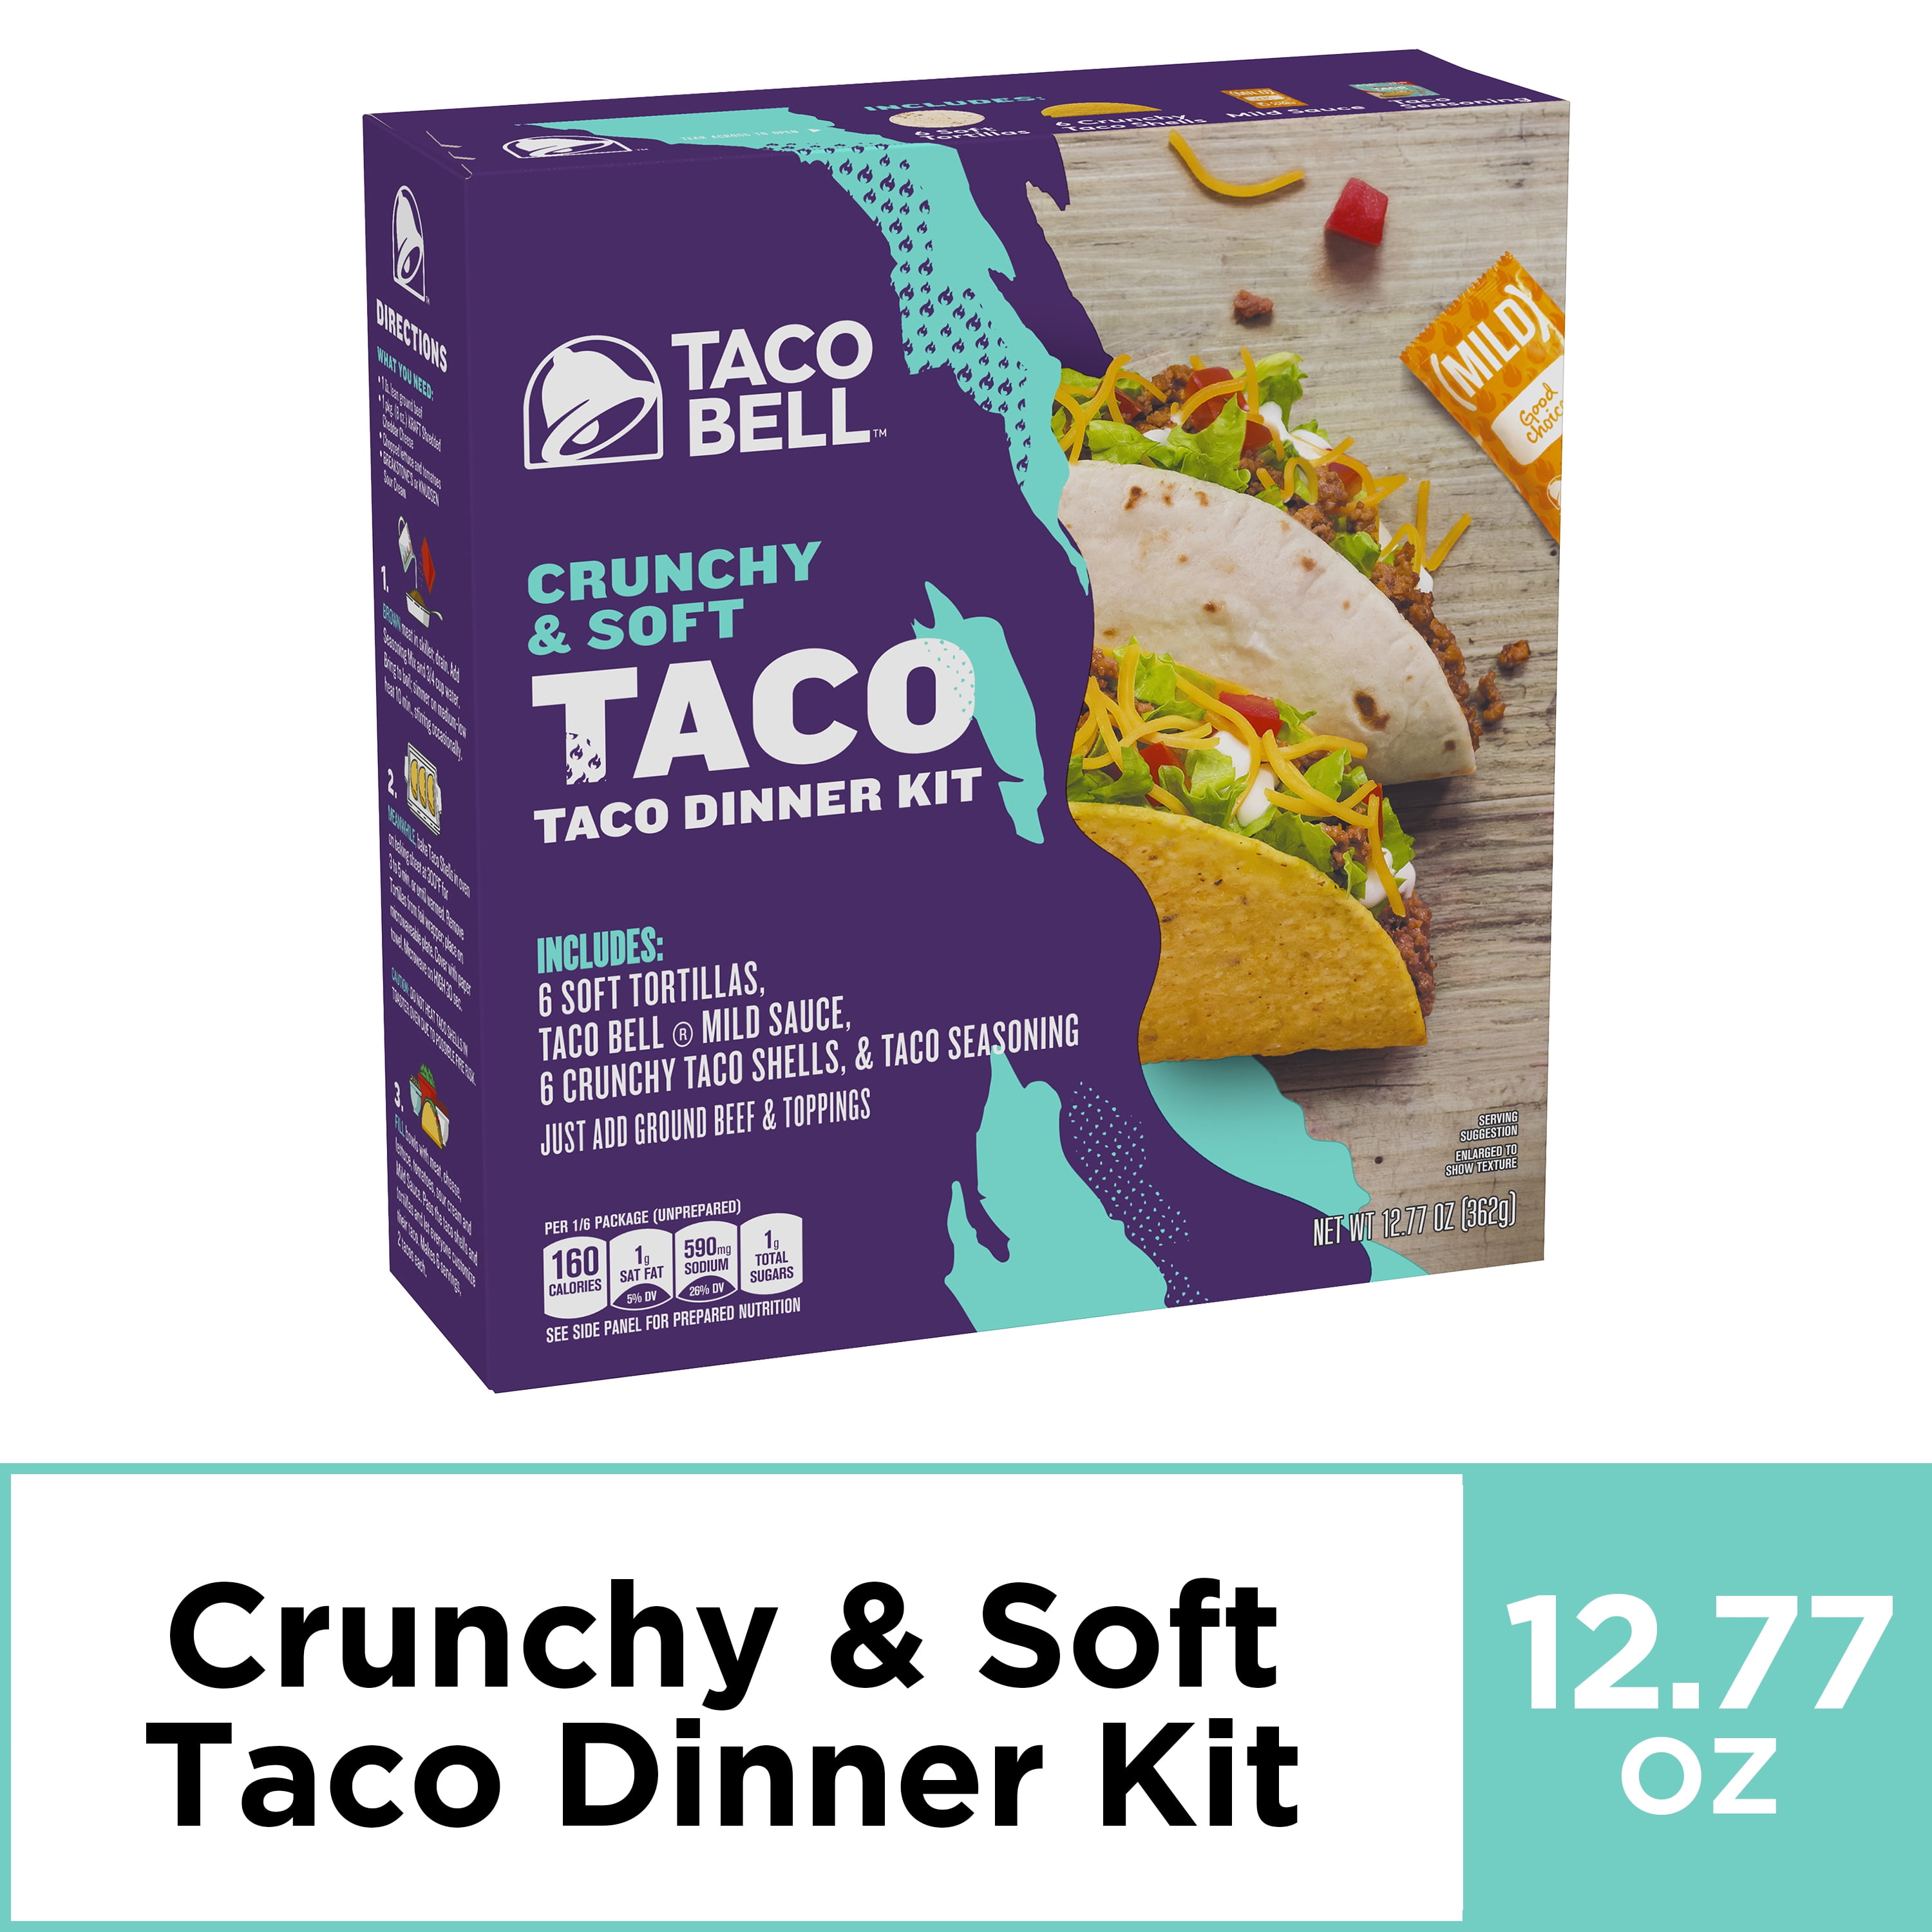 Taco Bell Crunchy & Soft Taco Dinner Kit, 12.77 oz Box ...